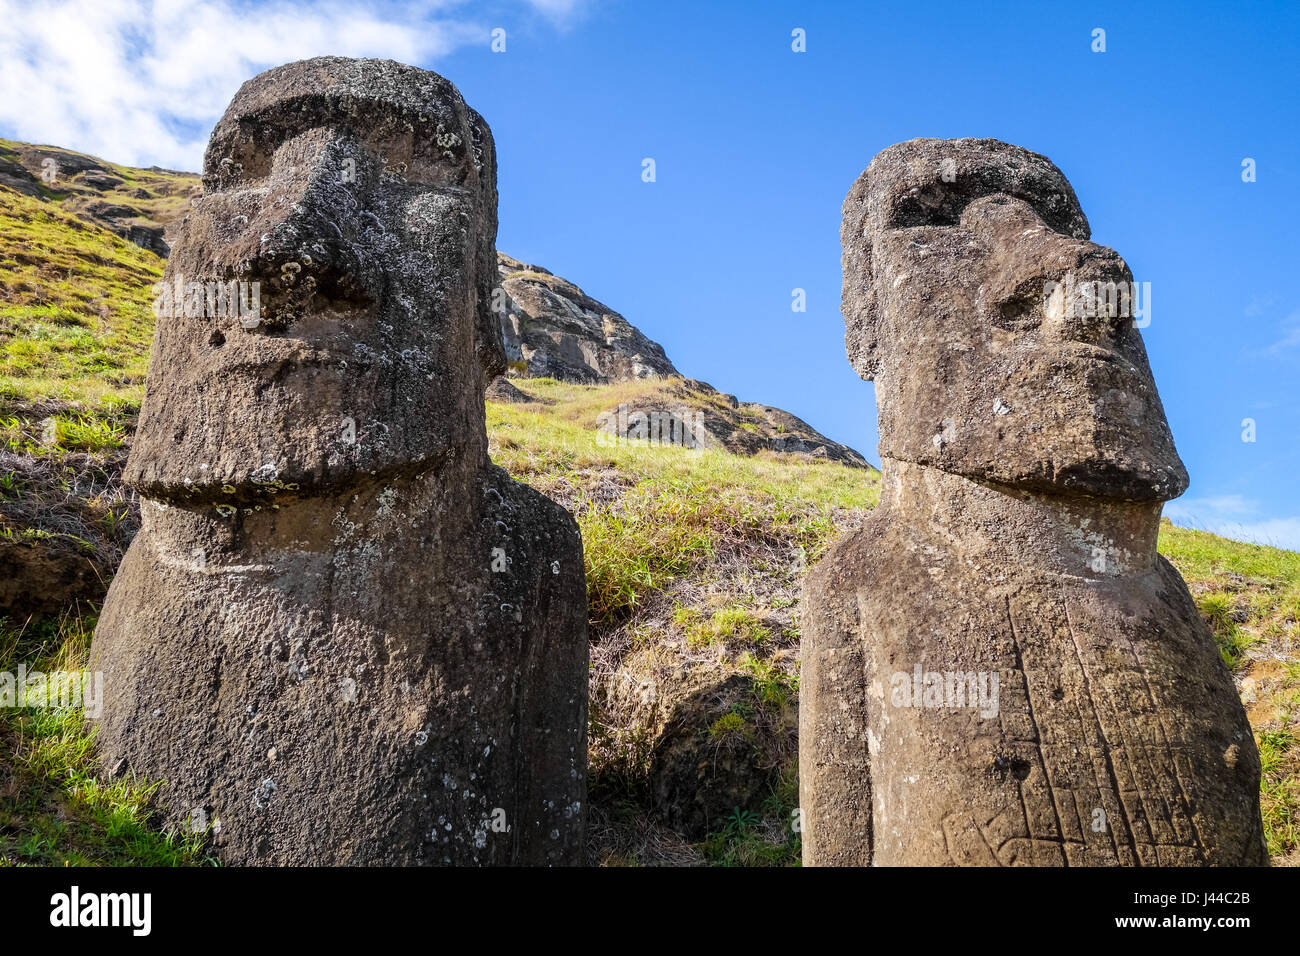 Moais statues on Rano Raraku volcano, easter island, Chile Stock Photo